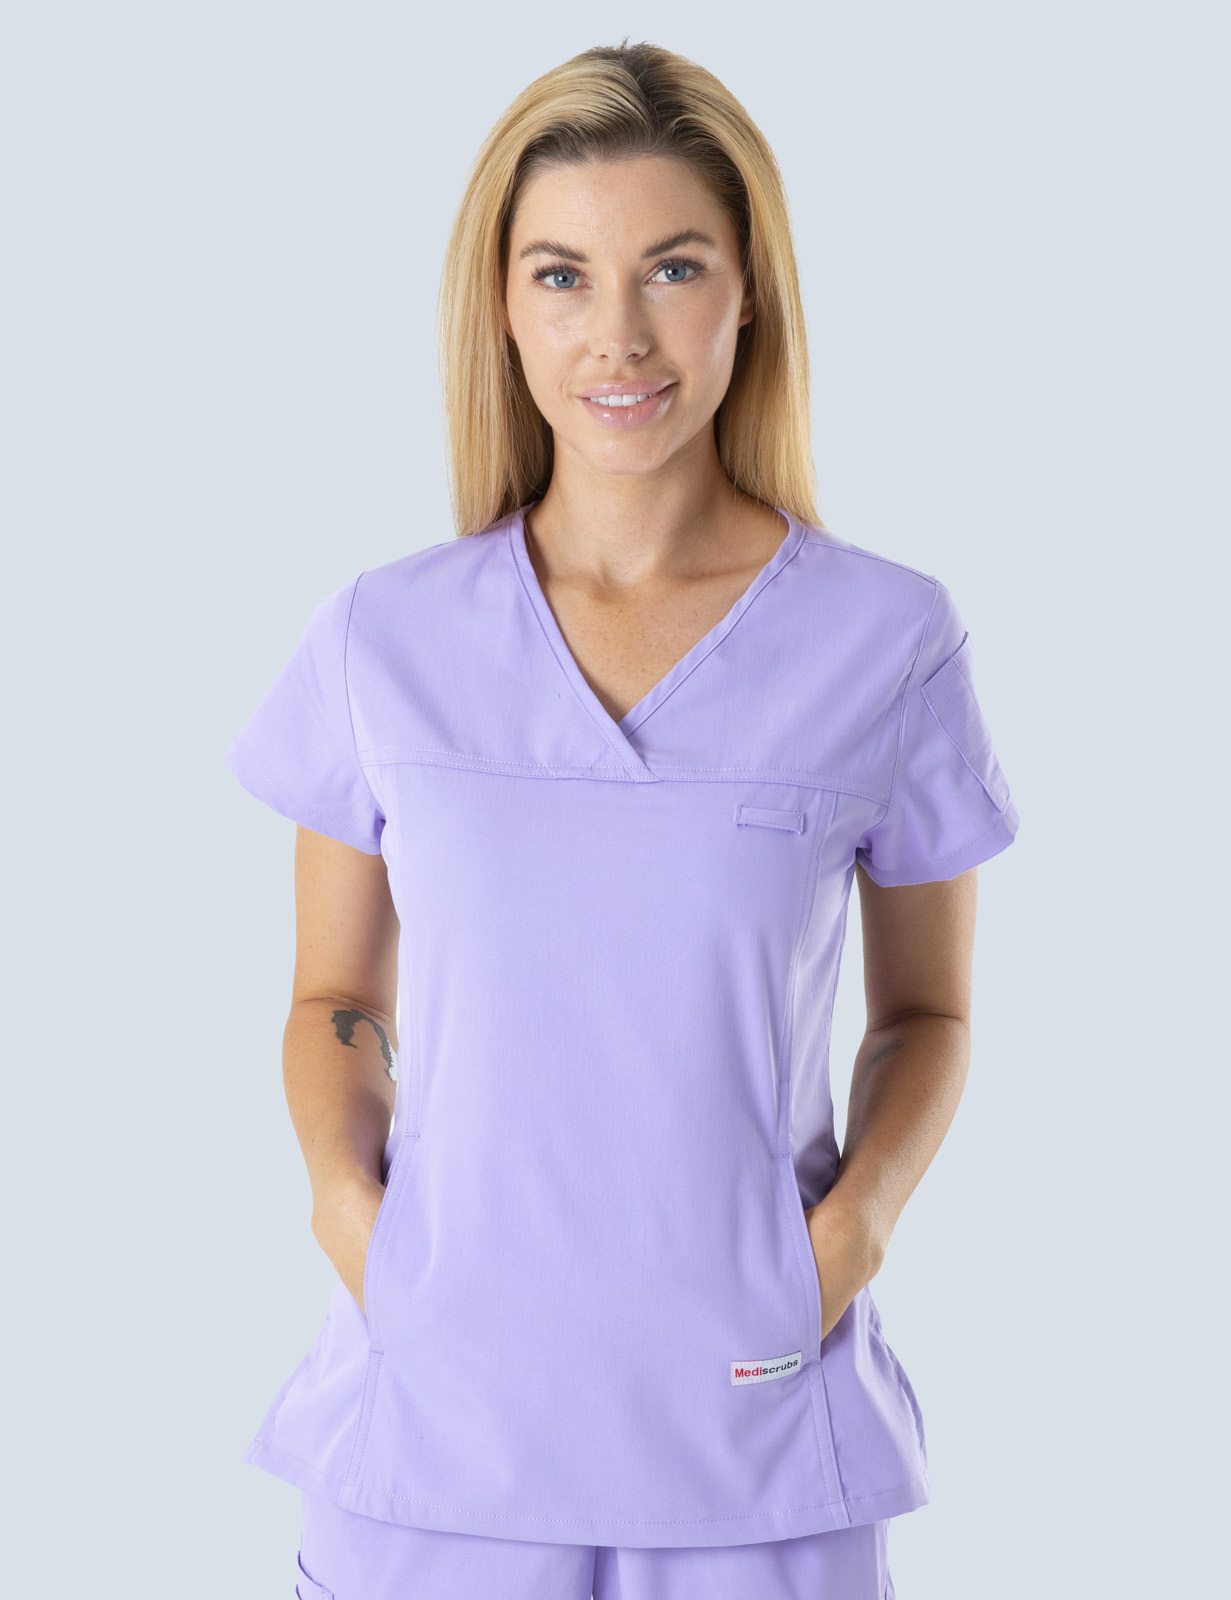 Queensland Children's Hospital Emergency Department Registrar Uniform Top Bundle  (Women's Fit Top in Lilac  incl Logos)